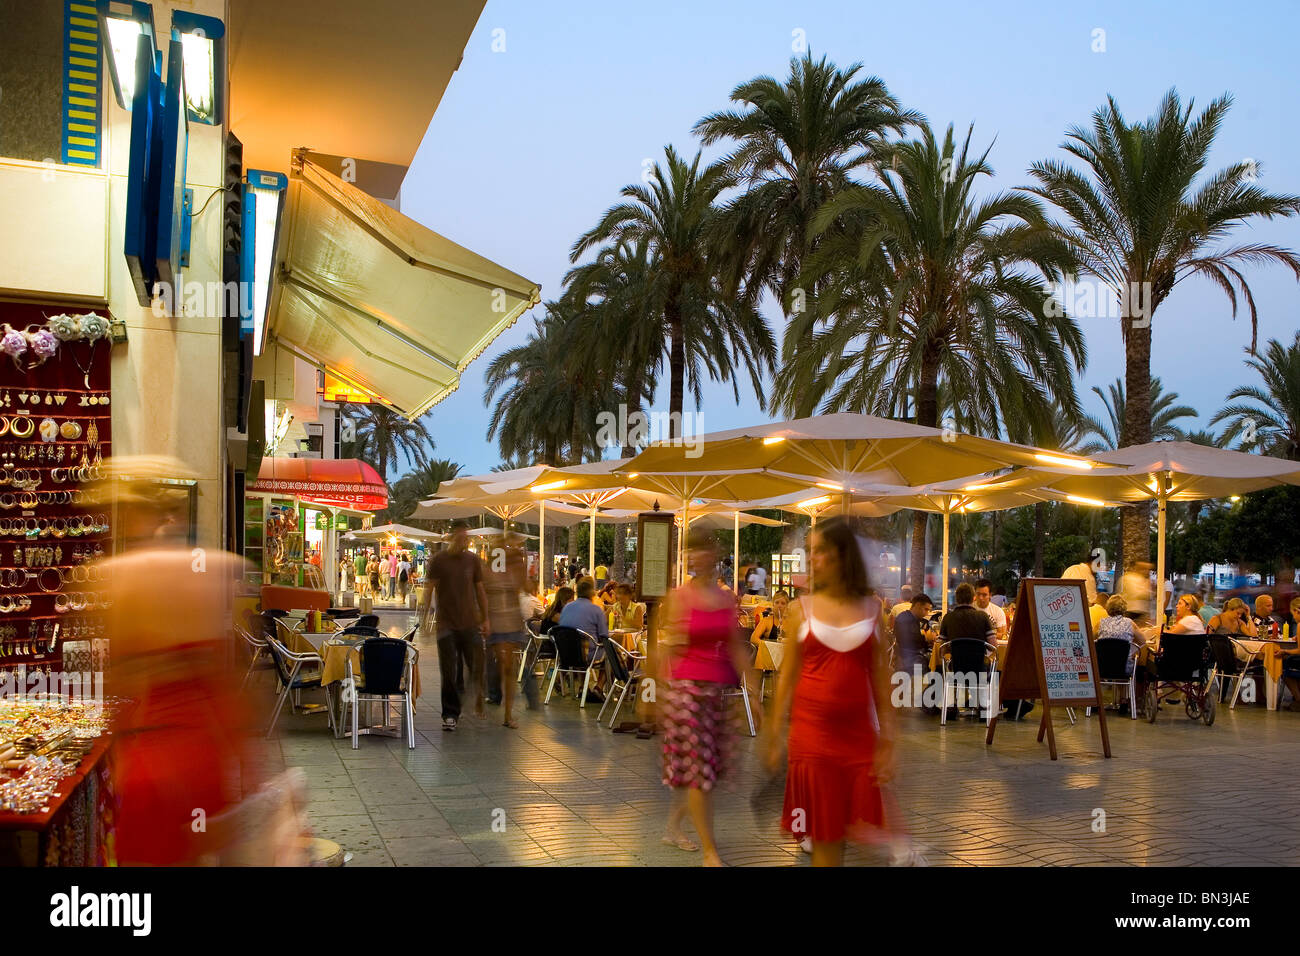 Restaurants along a promenade, Sant Antoni de Portmany, Ibiza, Spain Stock Photo